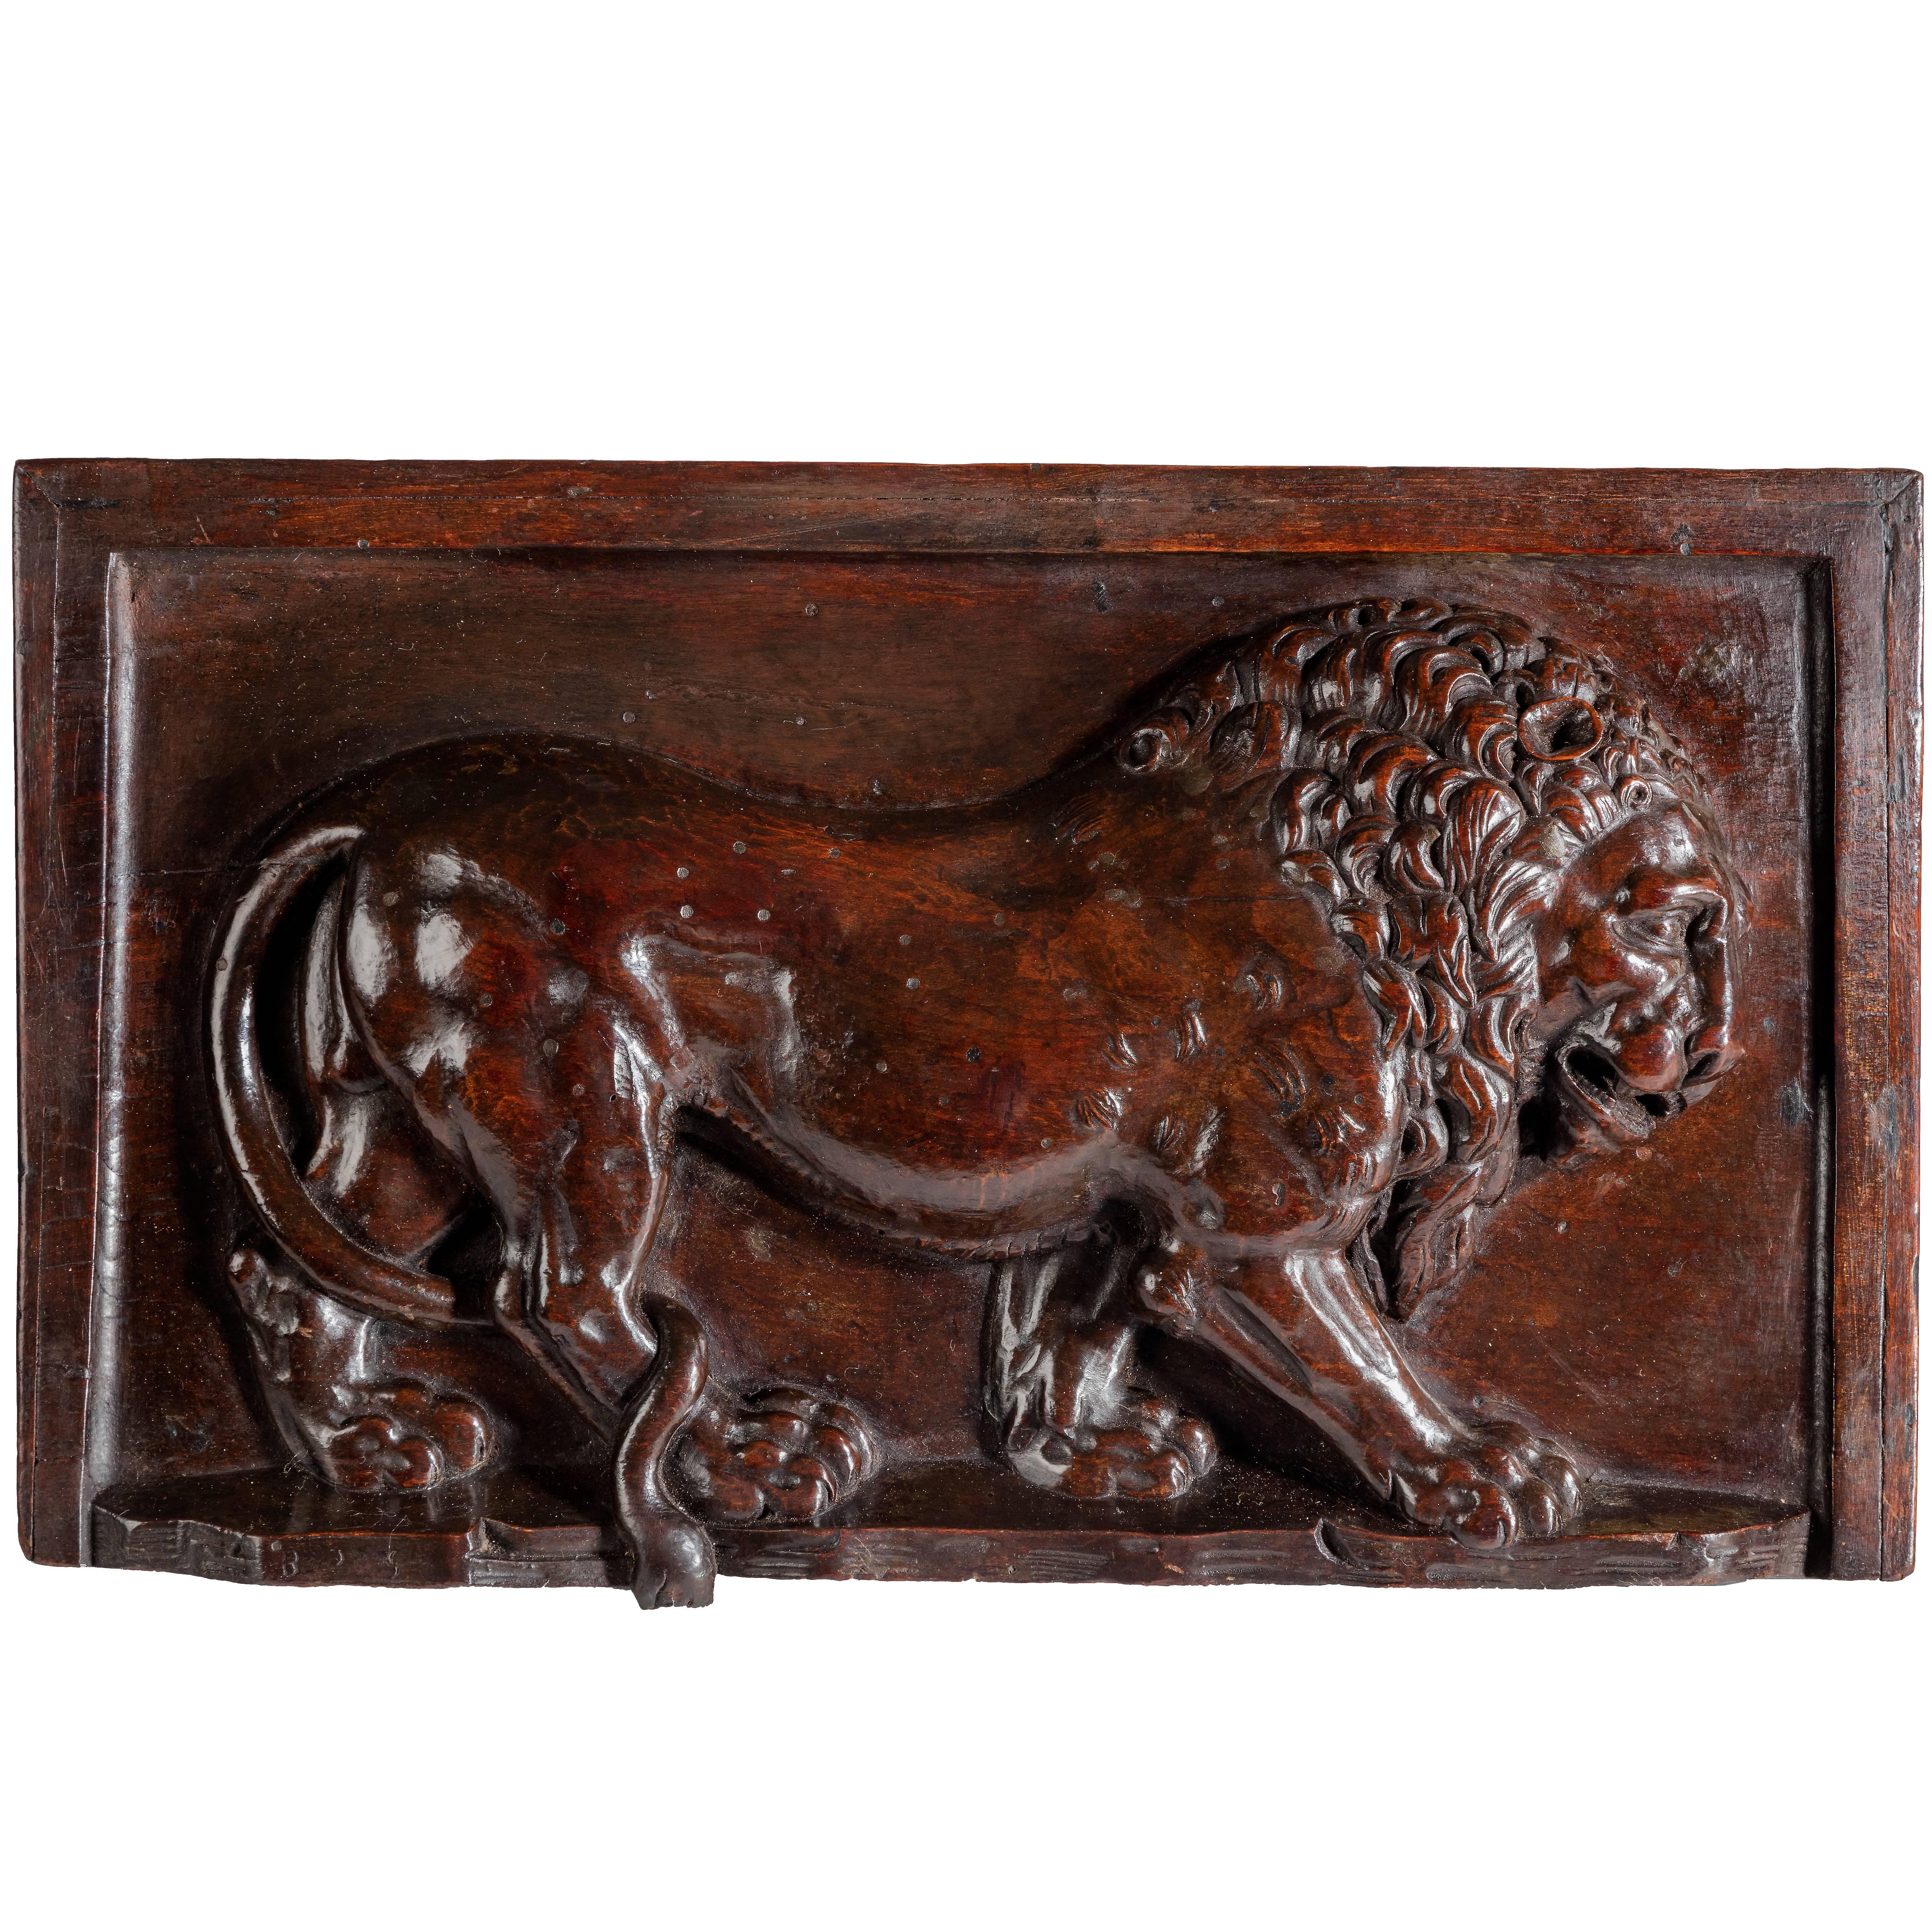 Carved Walnut Panel Depicting a Lion 